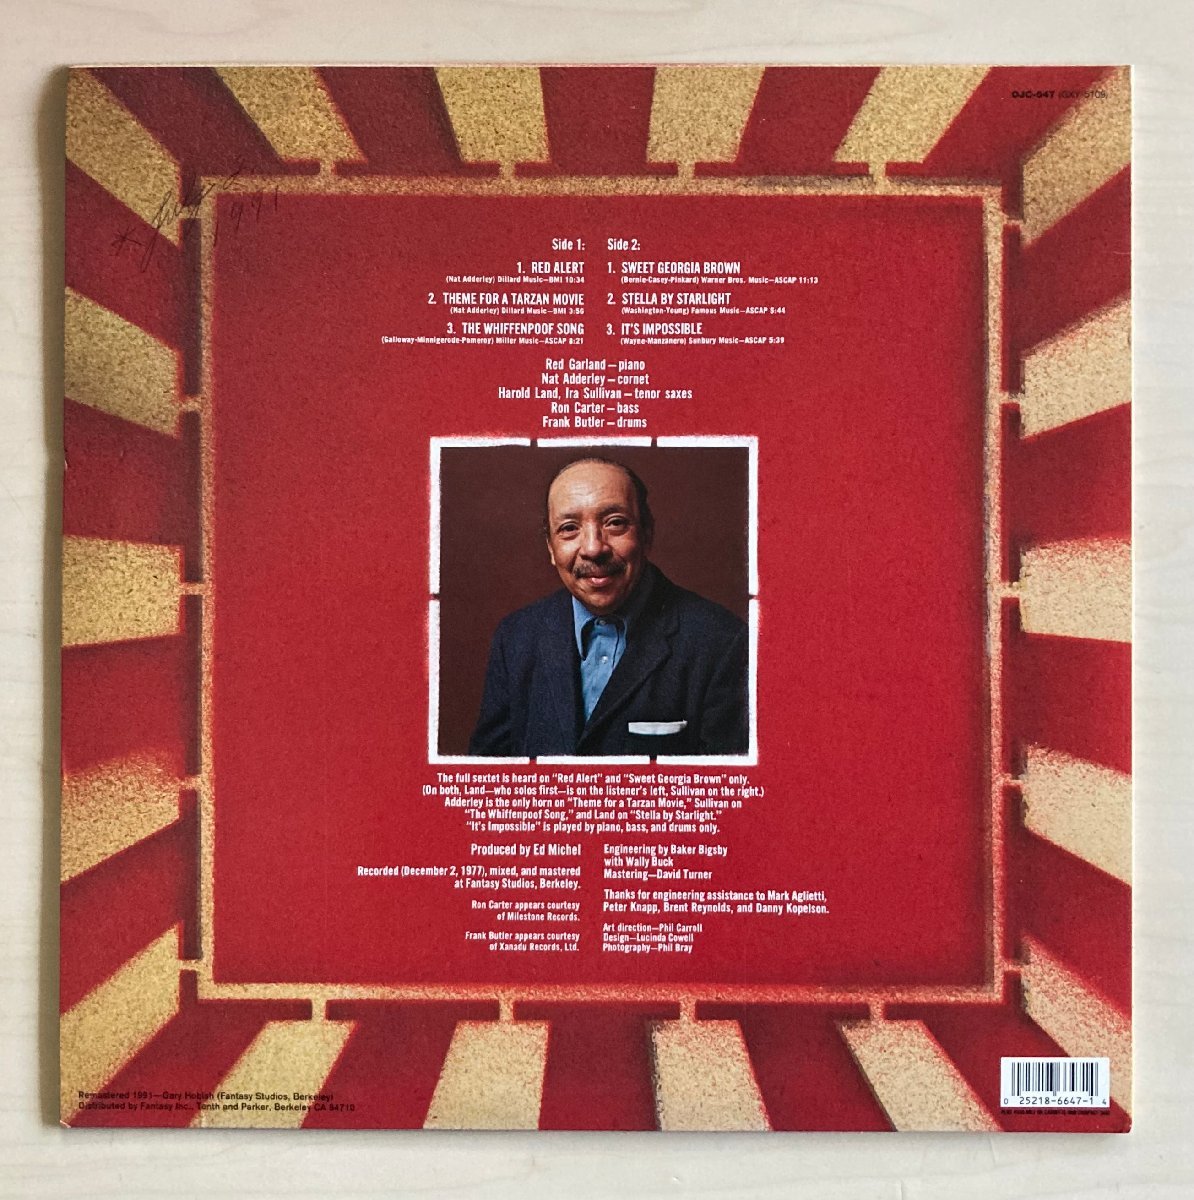 LPA22900 レッド・ガーランド RED GARLAND / RED ALERT 輸入盤LP 盤良好 USA_画像2